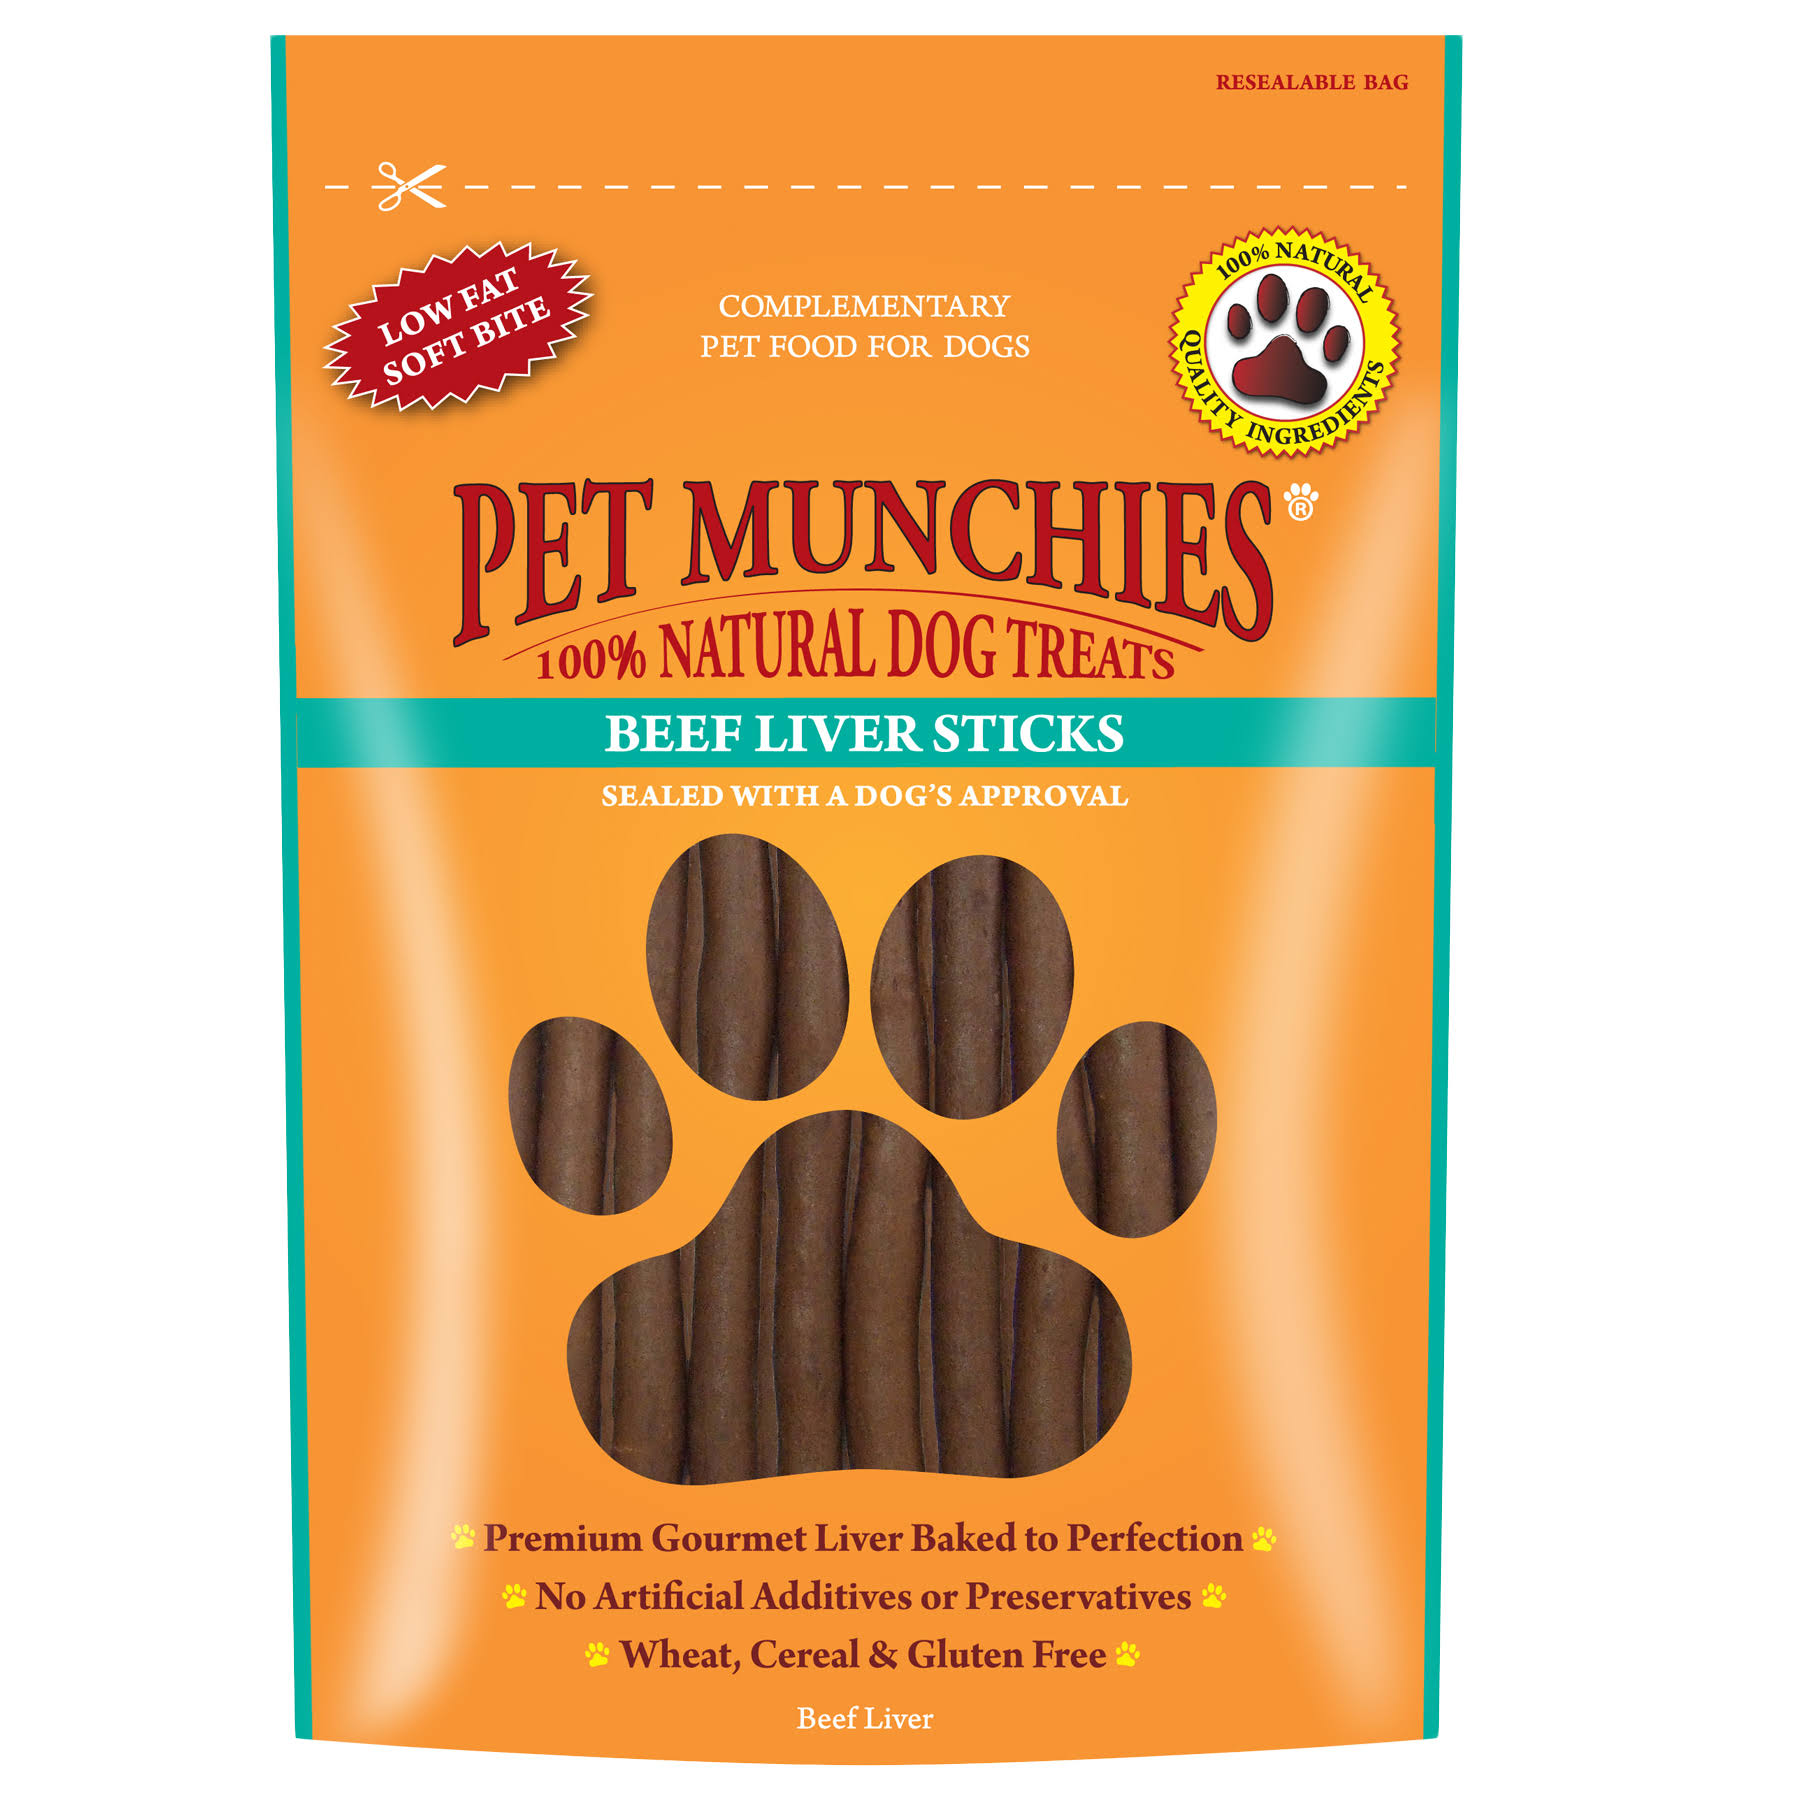 Pet Munchies 100% Natural Dog Treats - Beef Liver, 8 sticks 